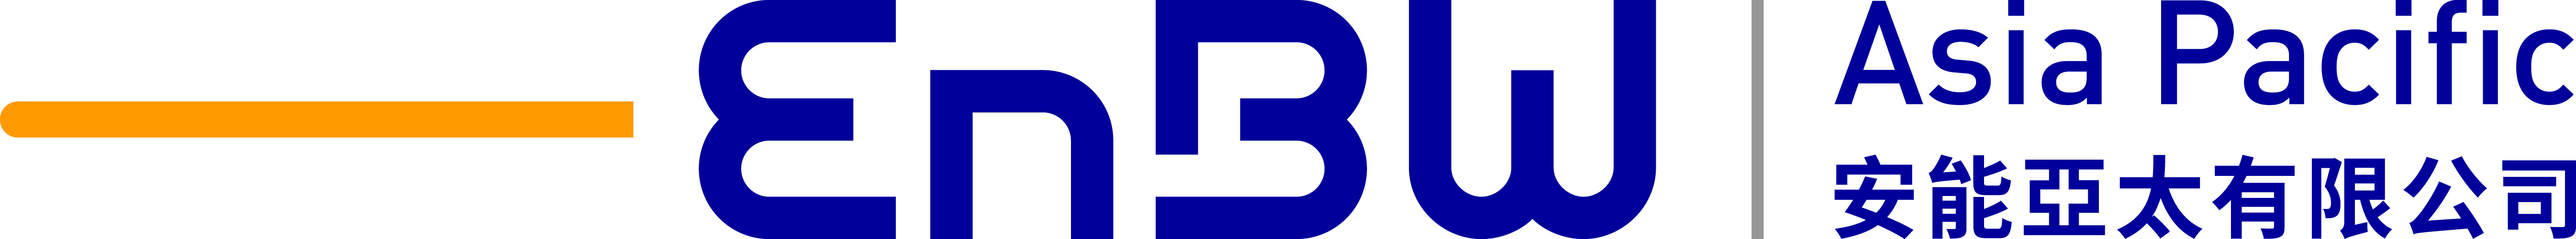 EnBW_Asia_Pacific_Ltd_Logo_BlauOrangeGrau_RGB Kopie